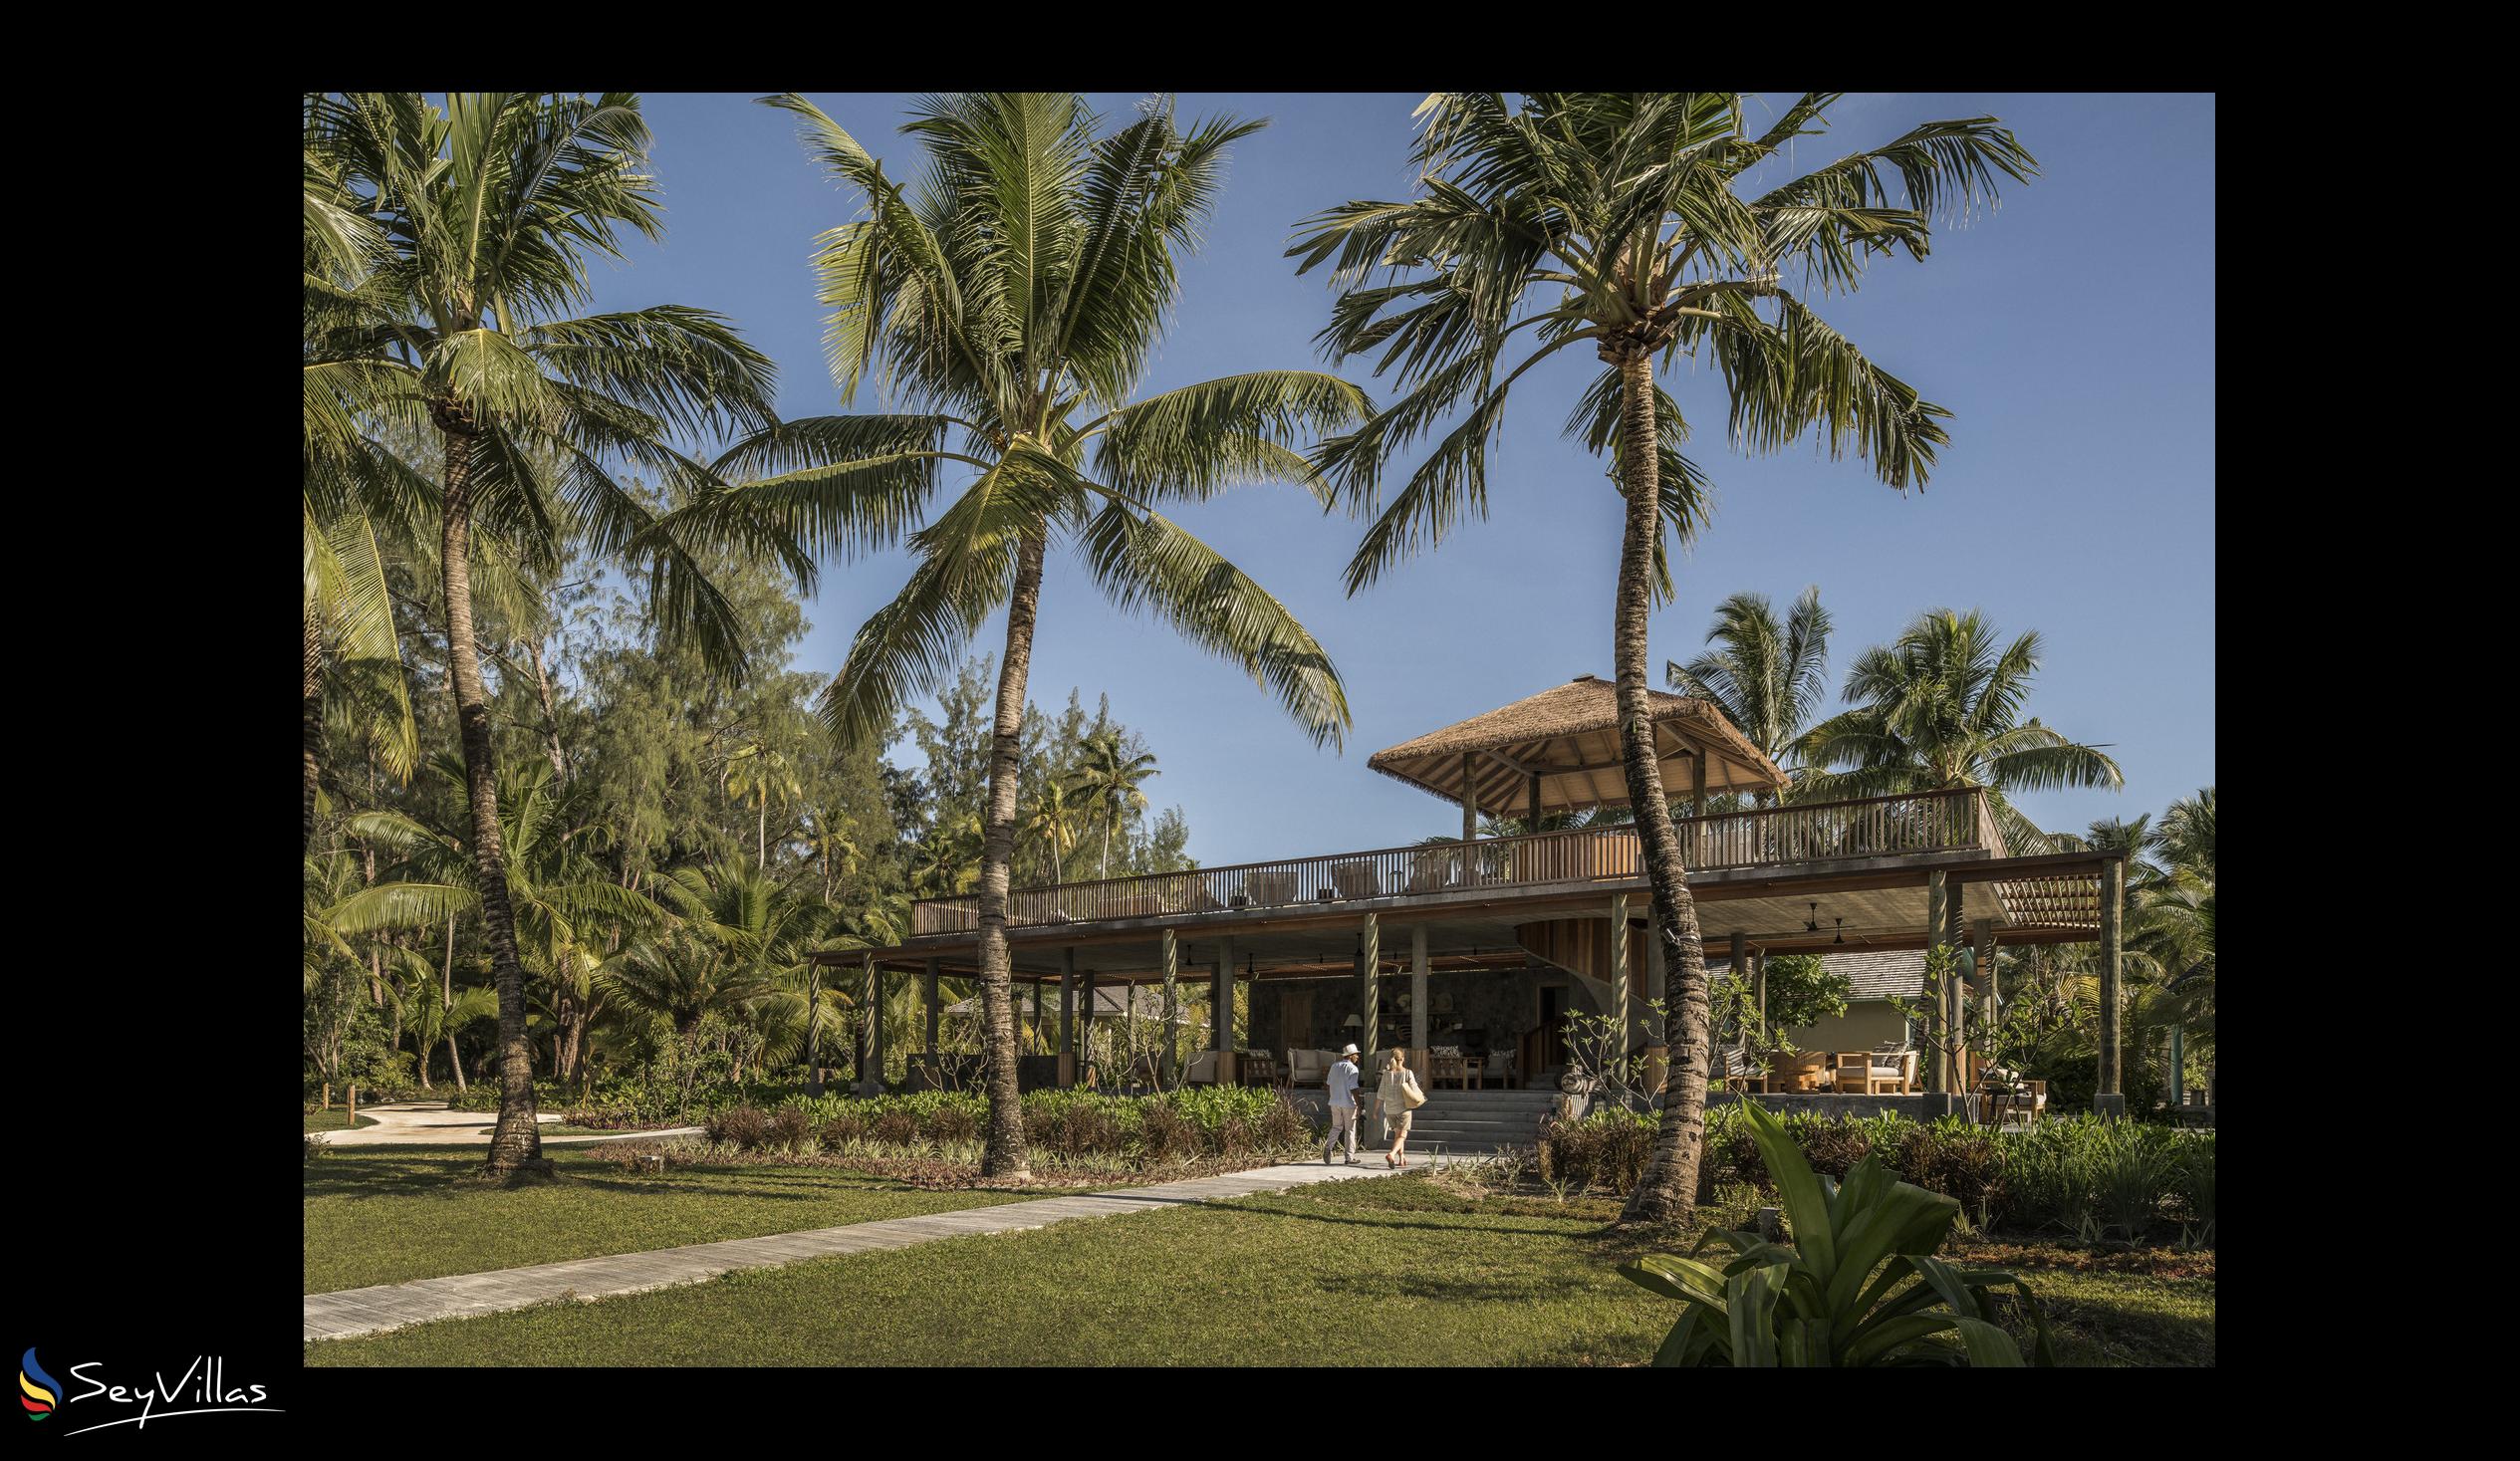 Foto 9: Four Seasons Resort Desroches Island - Aussenbereich - Desroches Island (Seychellen)